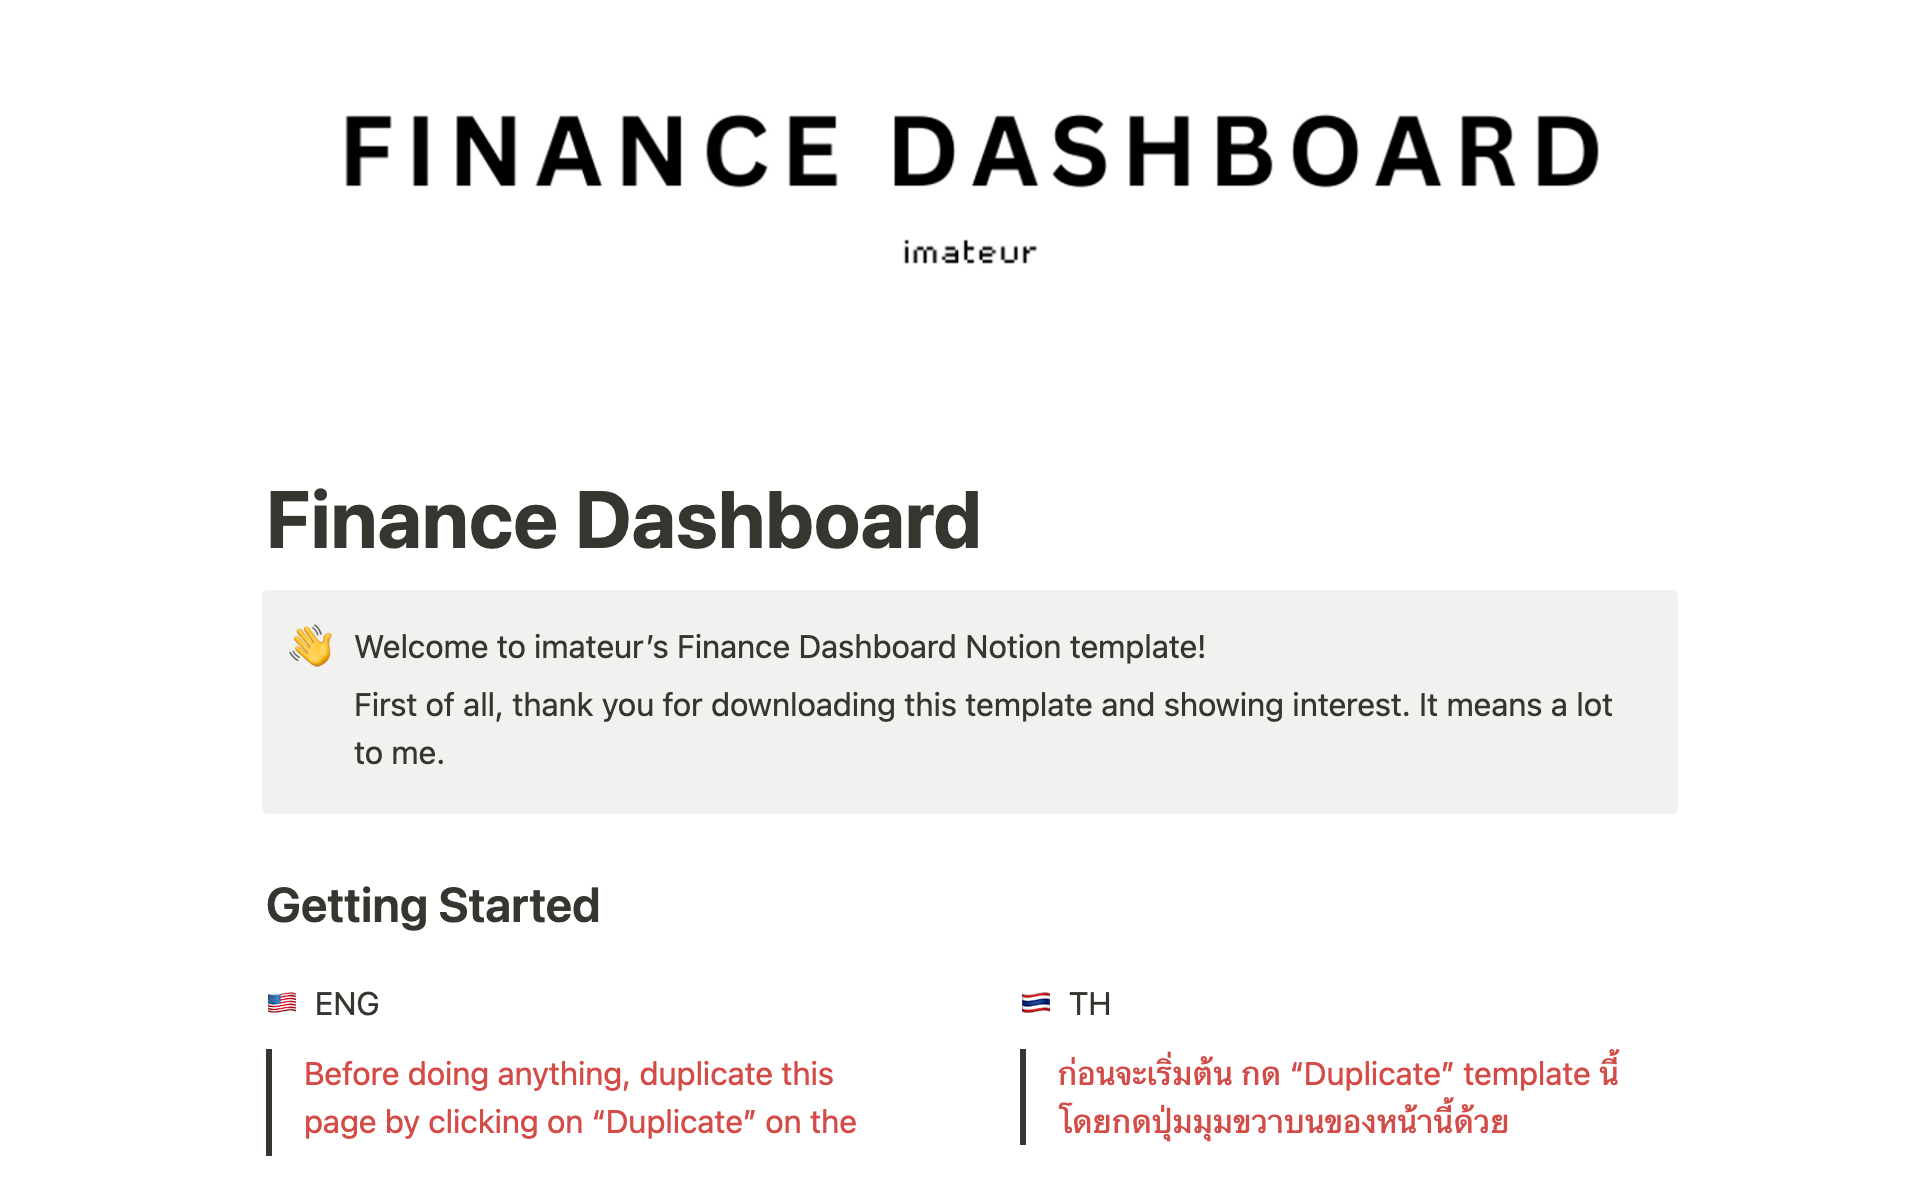 Aperçu du modèle de Finance Dashboard